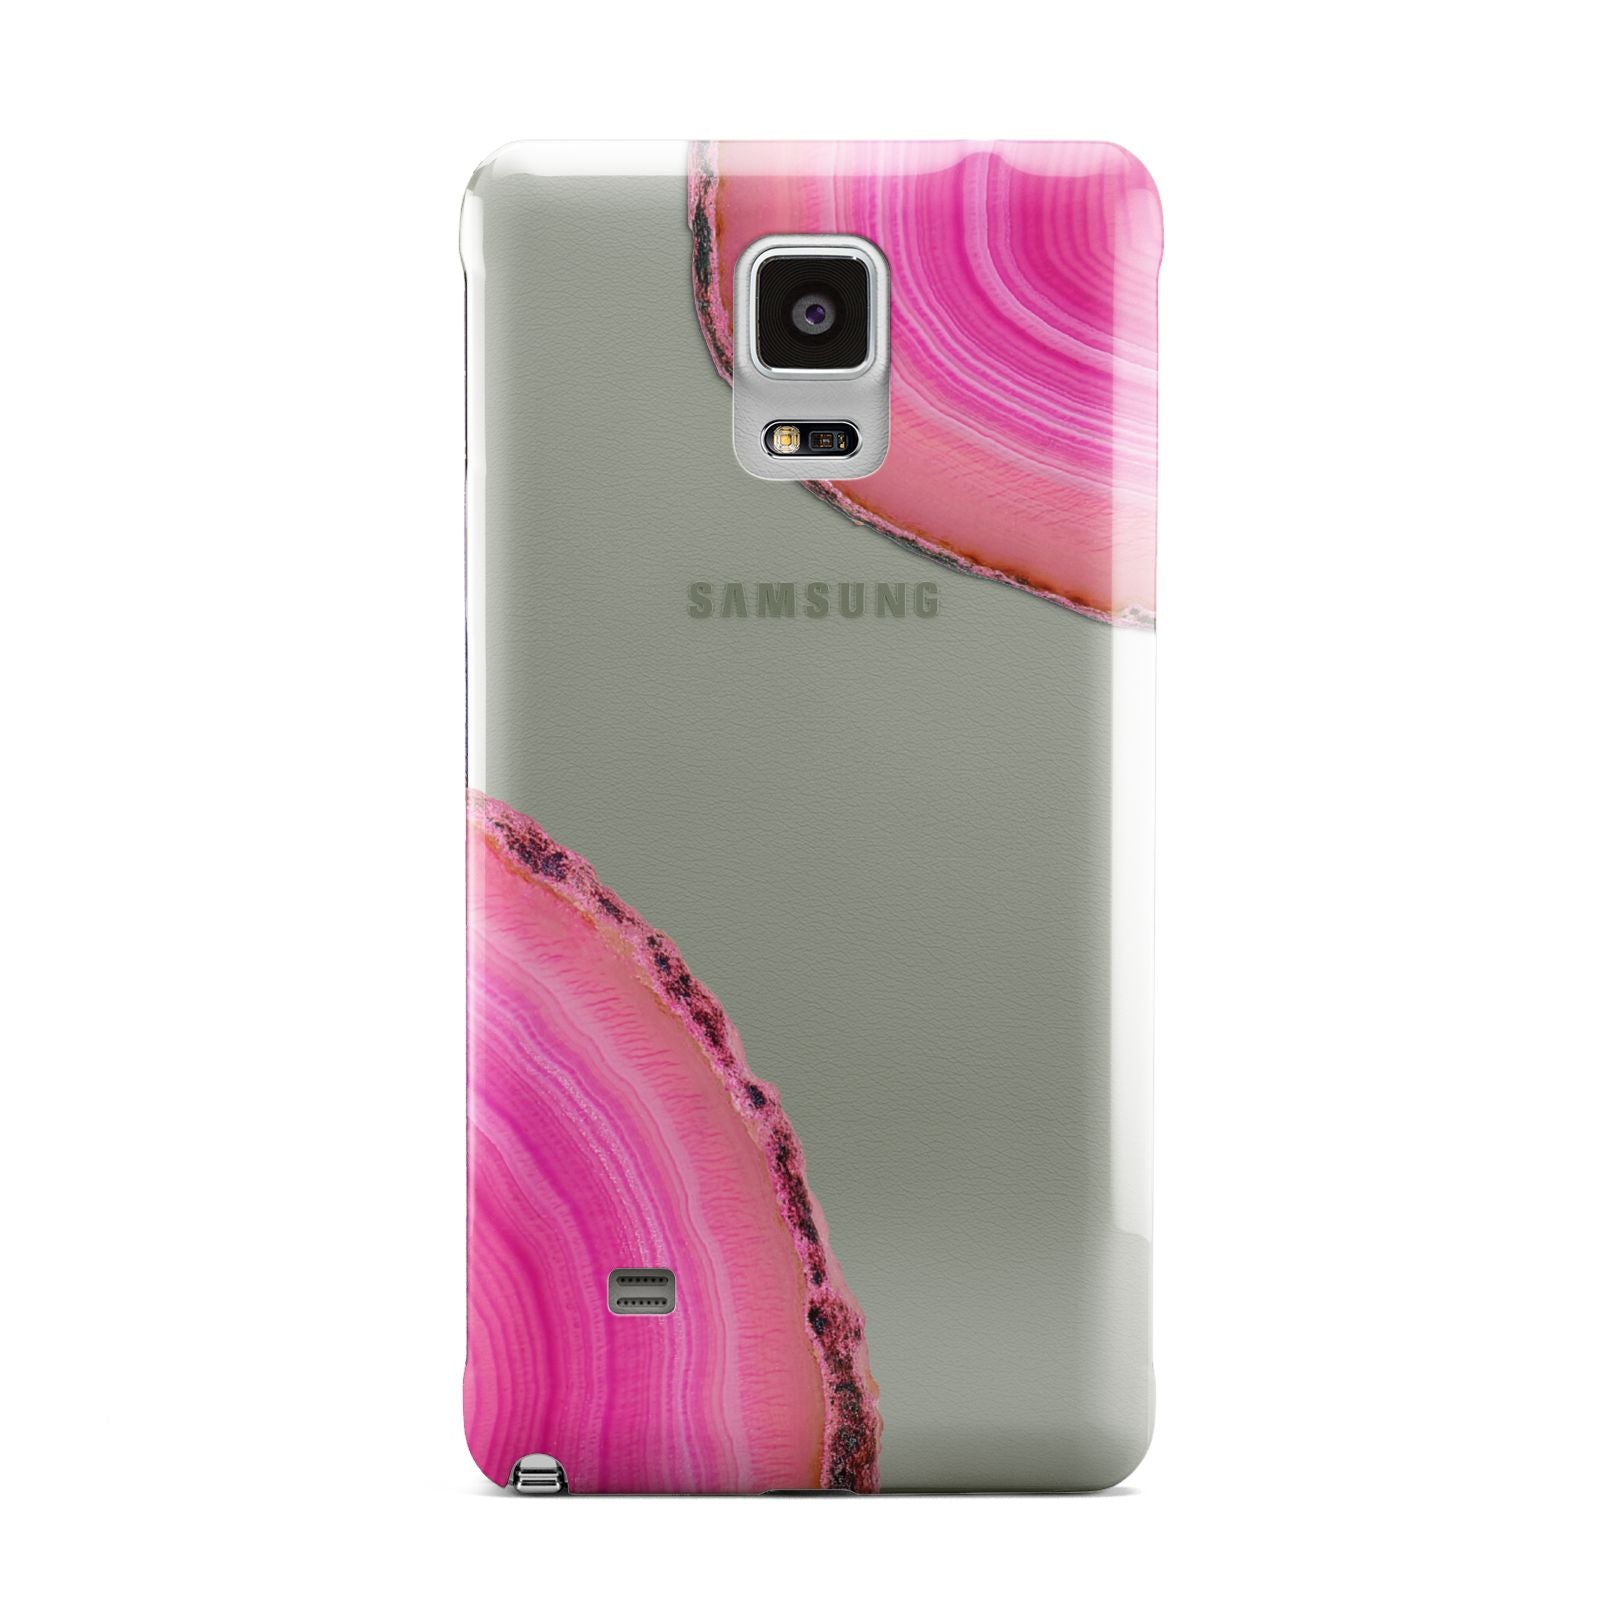 Agate Bright Pink Samsung Galaxy Note 4 Case